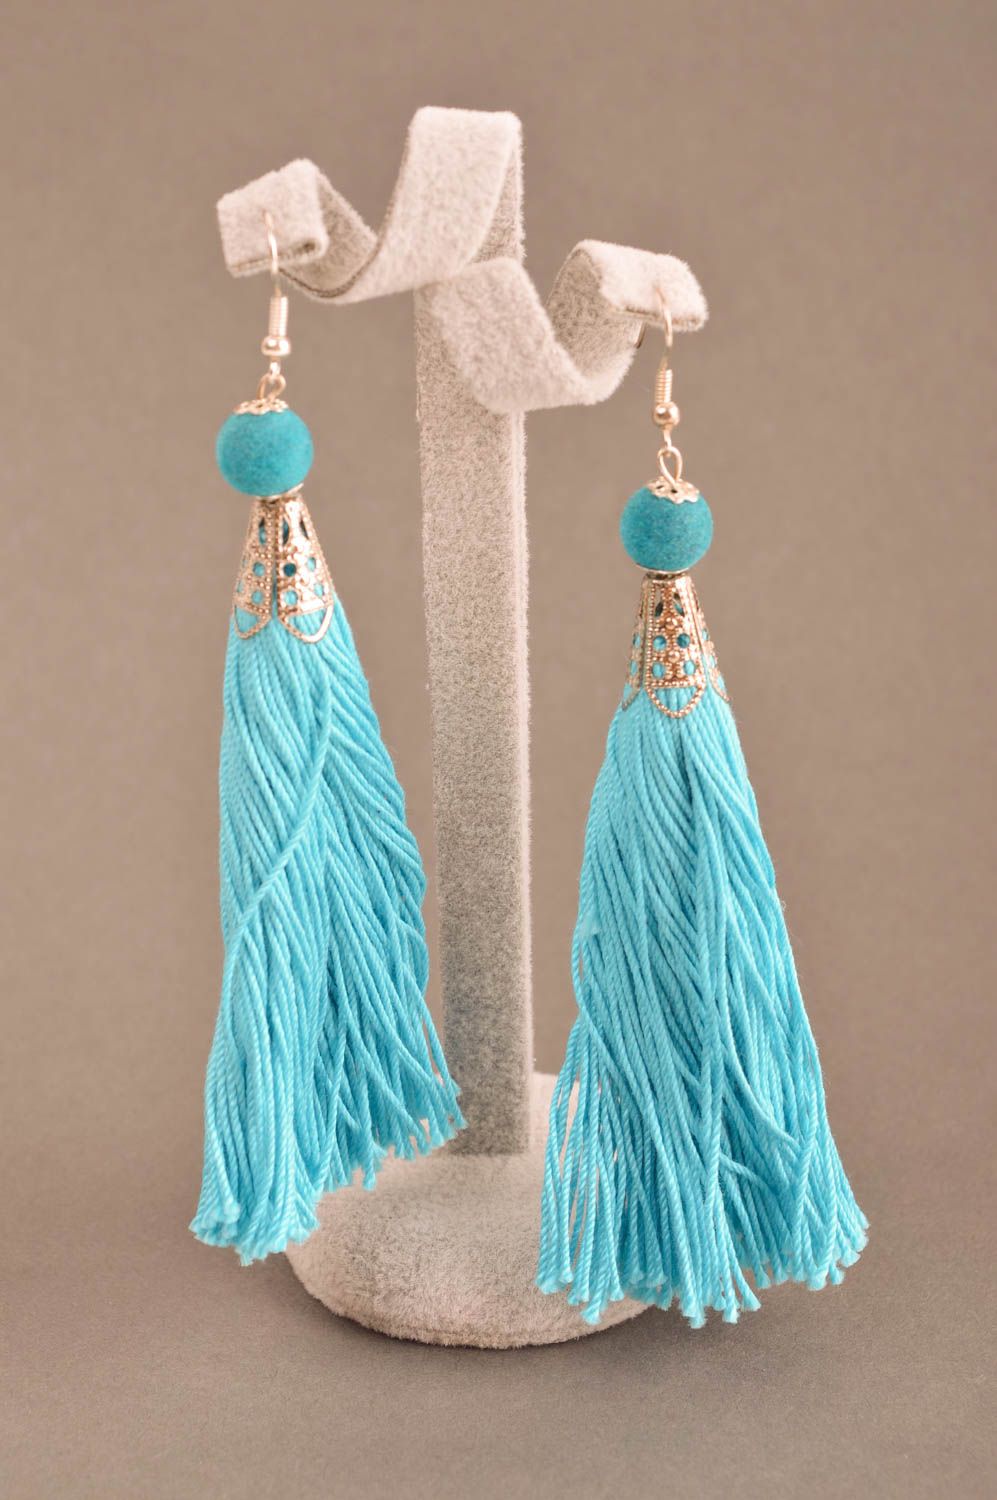 Unusual handmade thread earrings tassel earrings textile earrings gifts for her photo 1